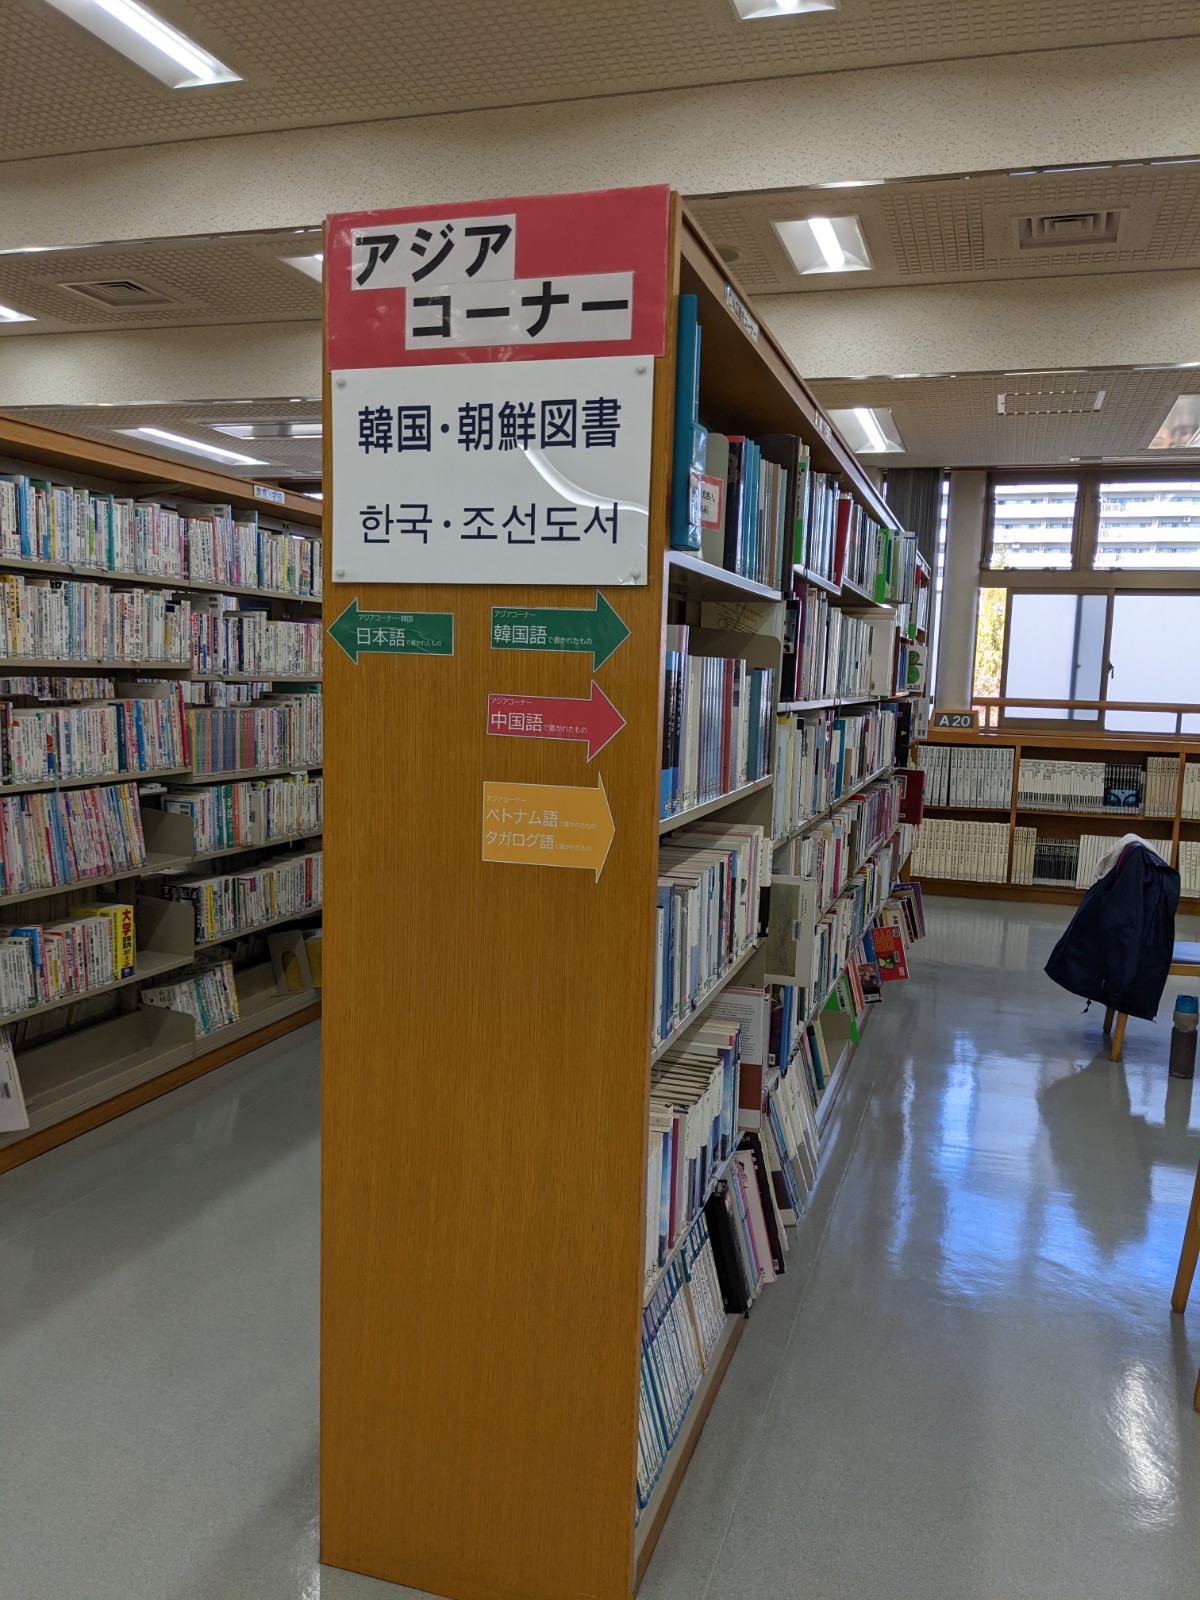 Shin-nagata library “Asia Corner”